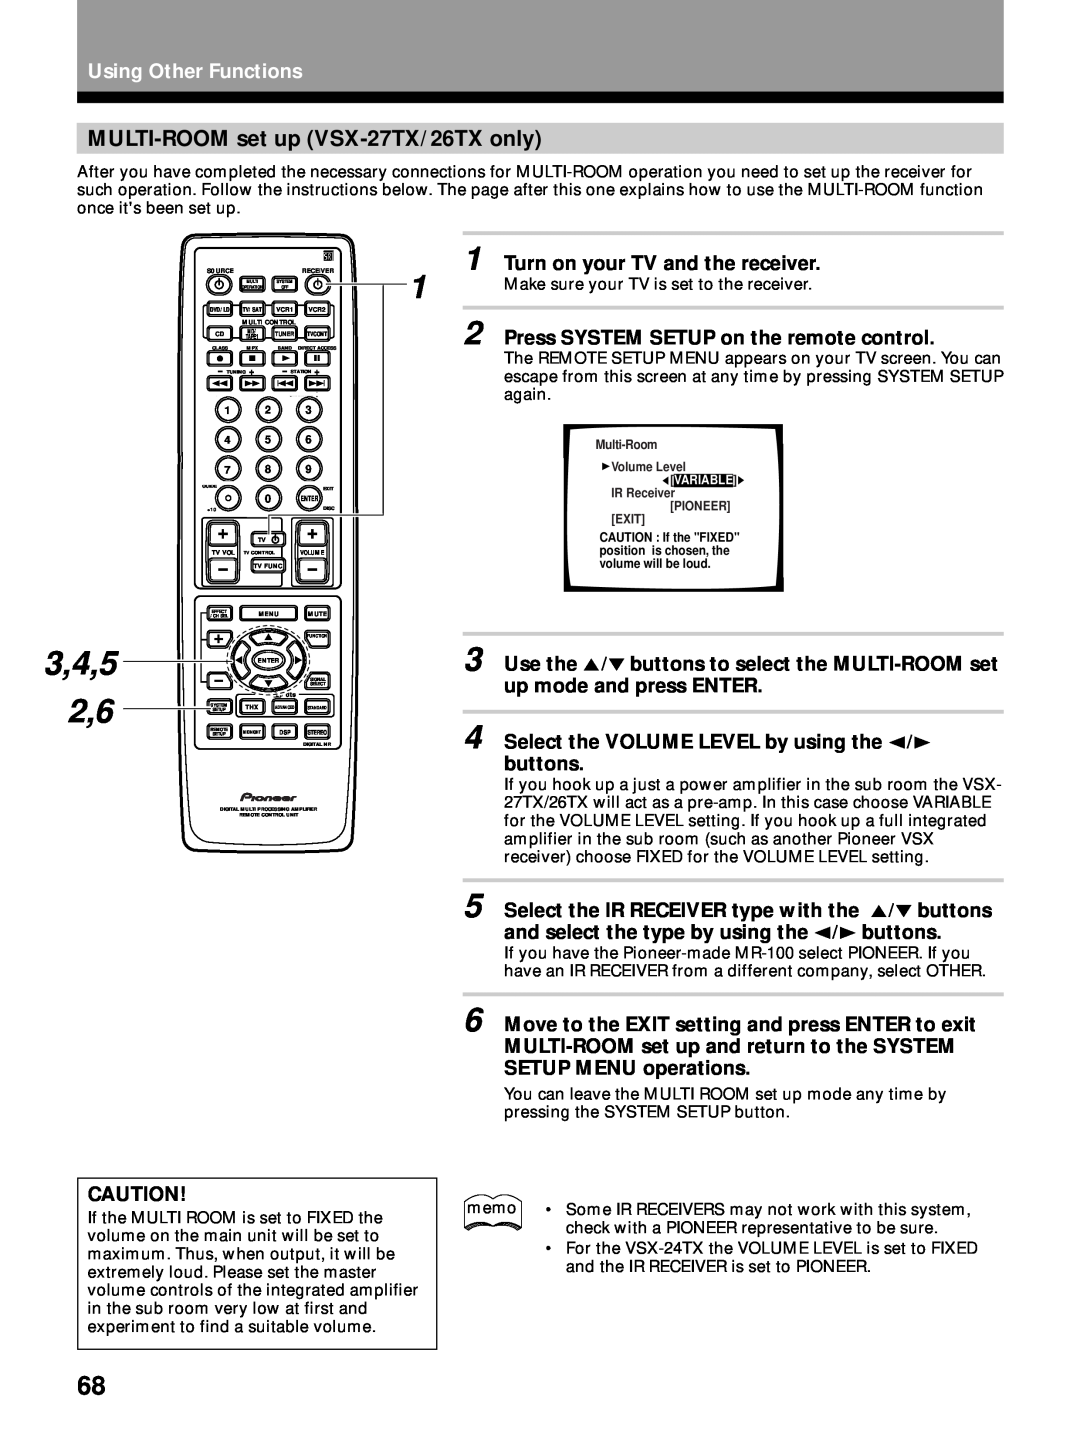 Pioneer VSX-24TX, VSX-26TX manual 3,4,5 2,6, MULTI-ROOMset up VSX-27TX/26TXonly, Press SYSTEM SETUP on the remote control 